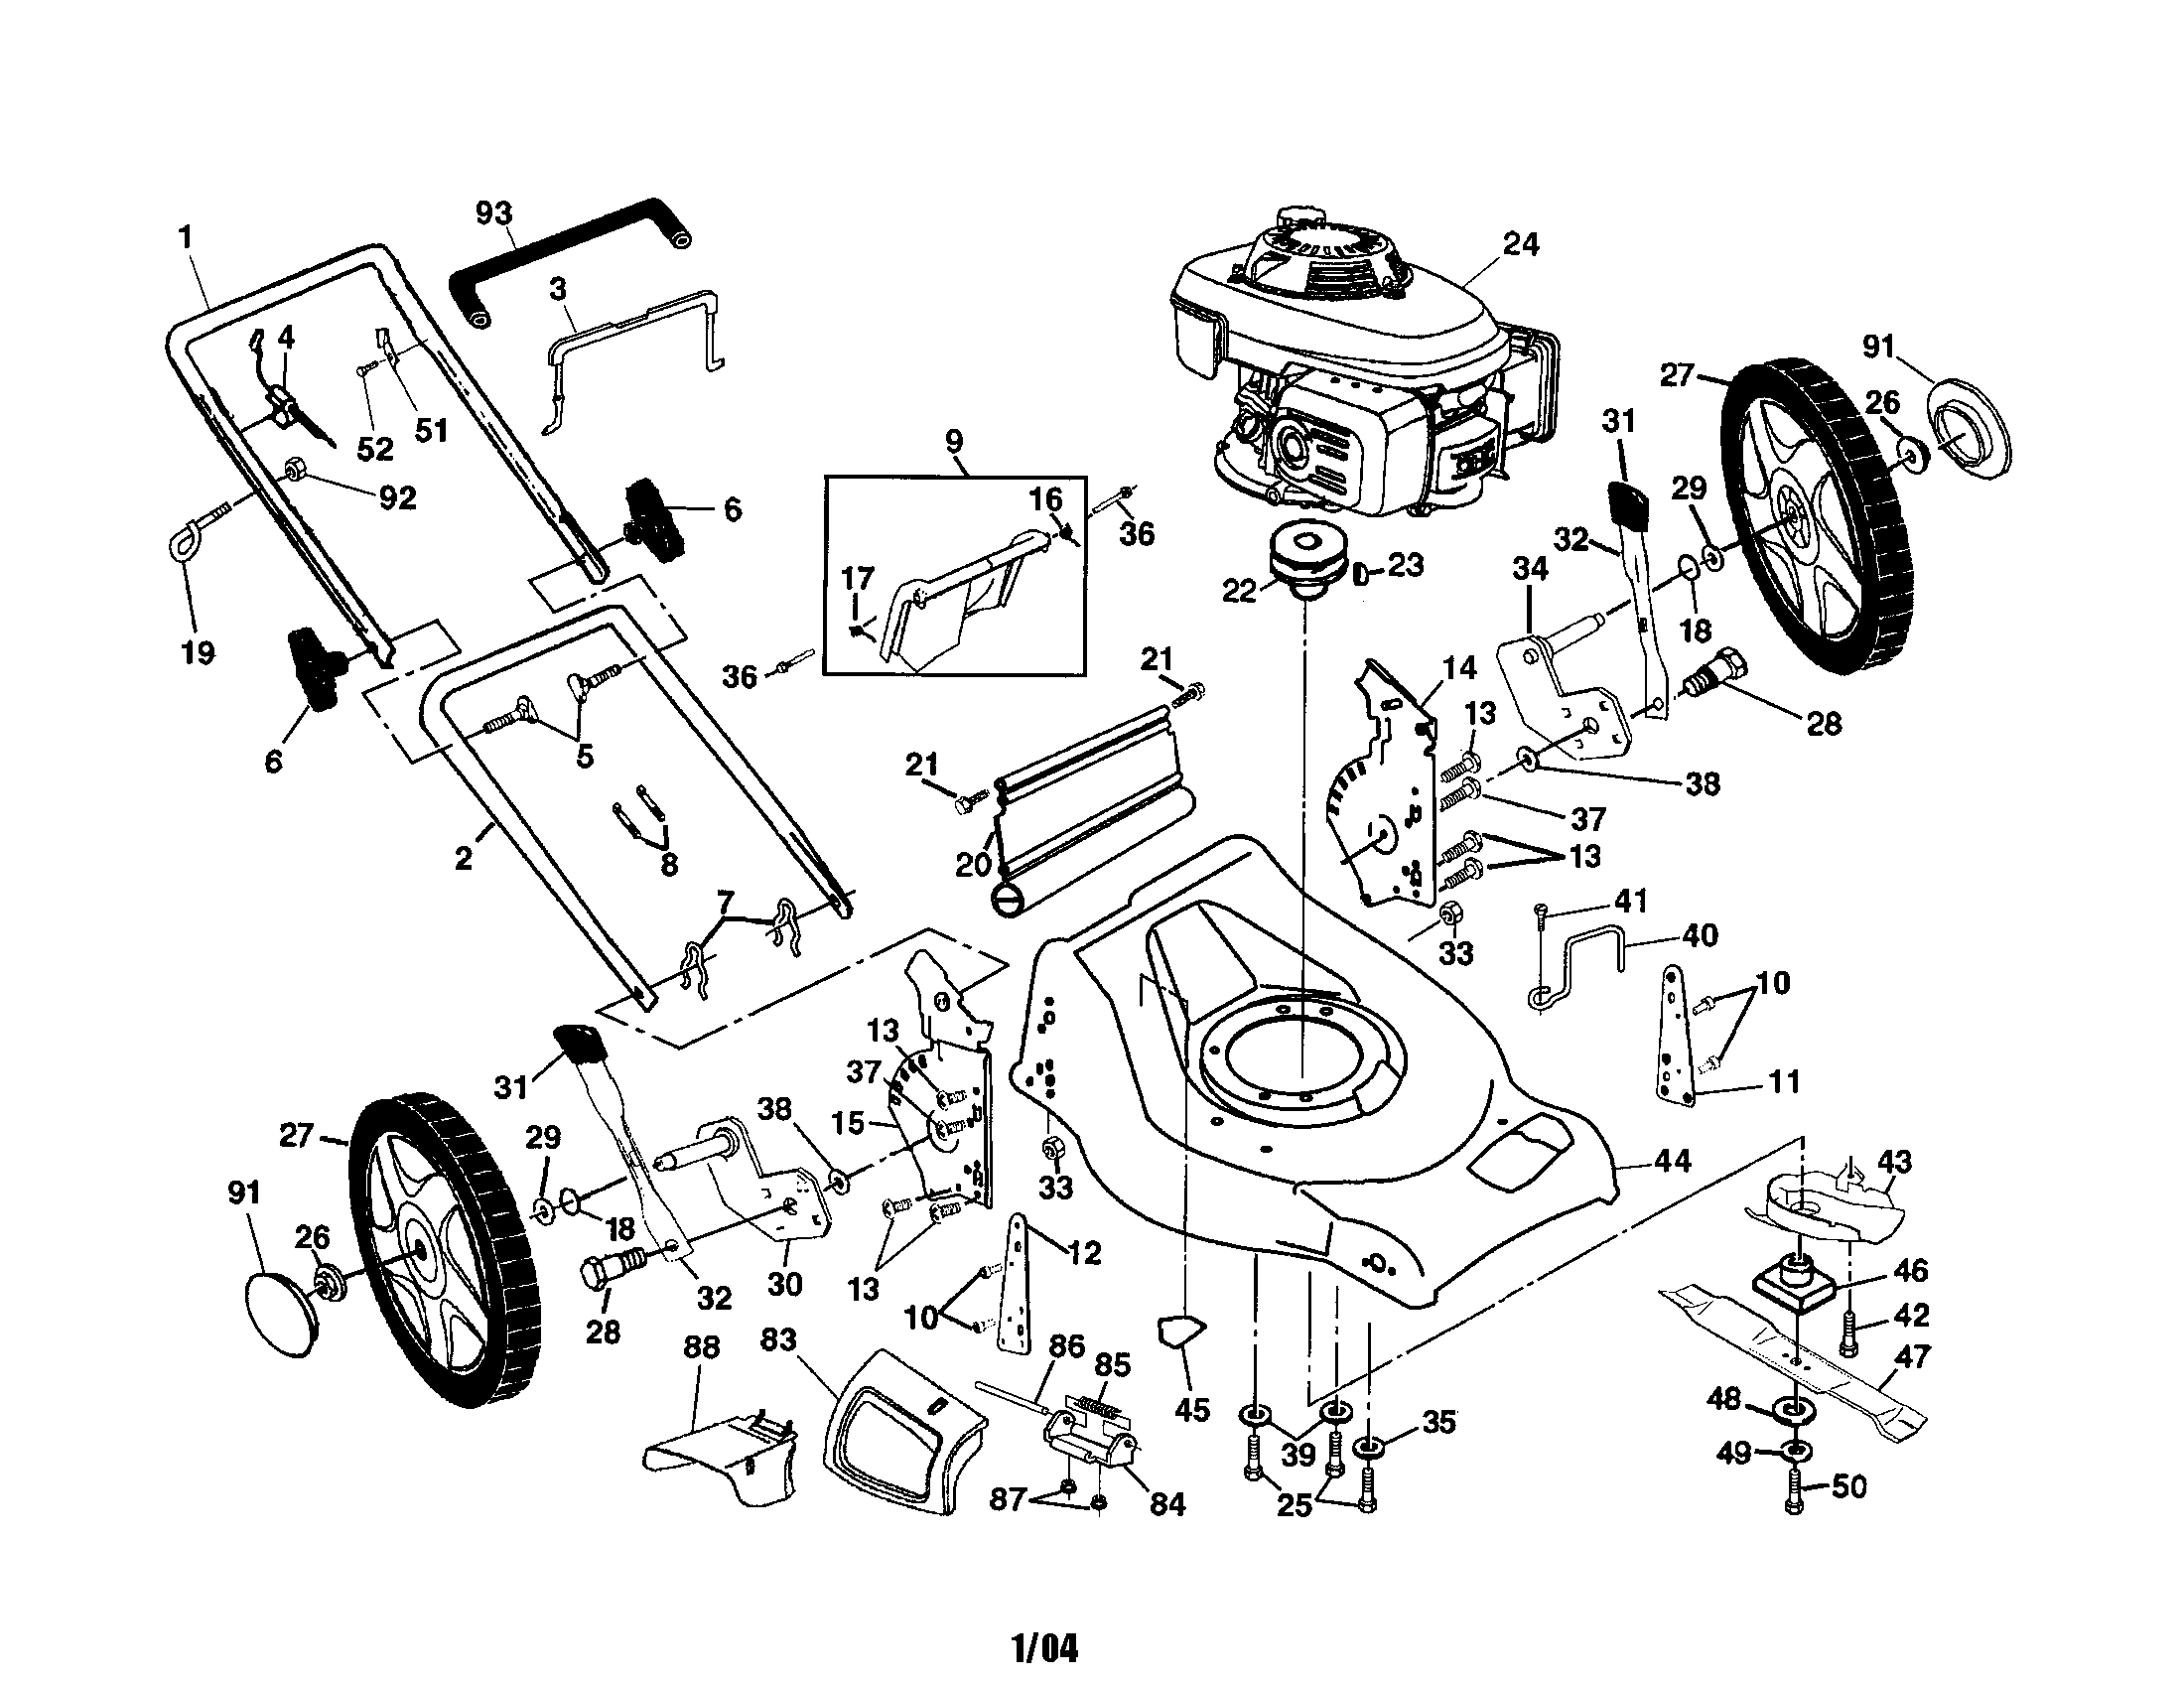 Husqvarna Lawn Mower Parts Diagram Wiring Diagram Source